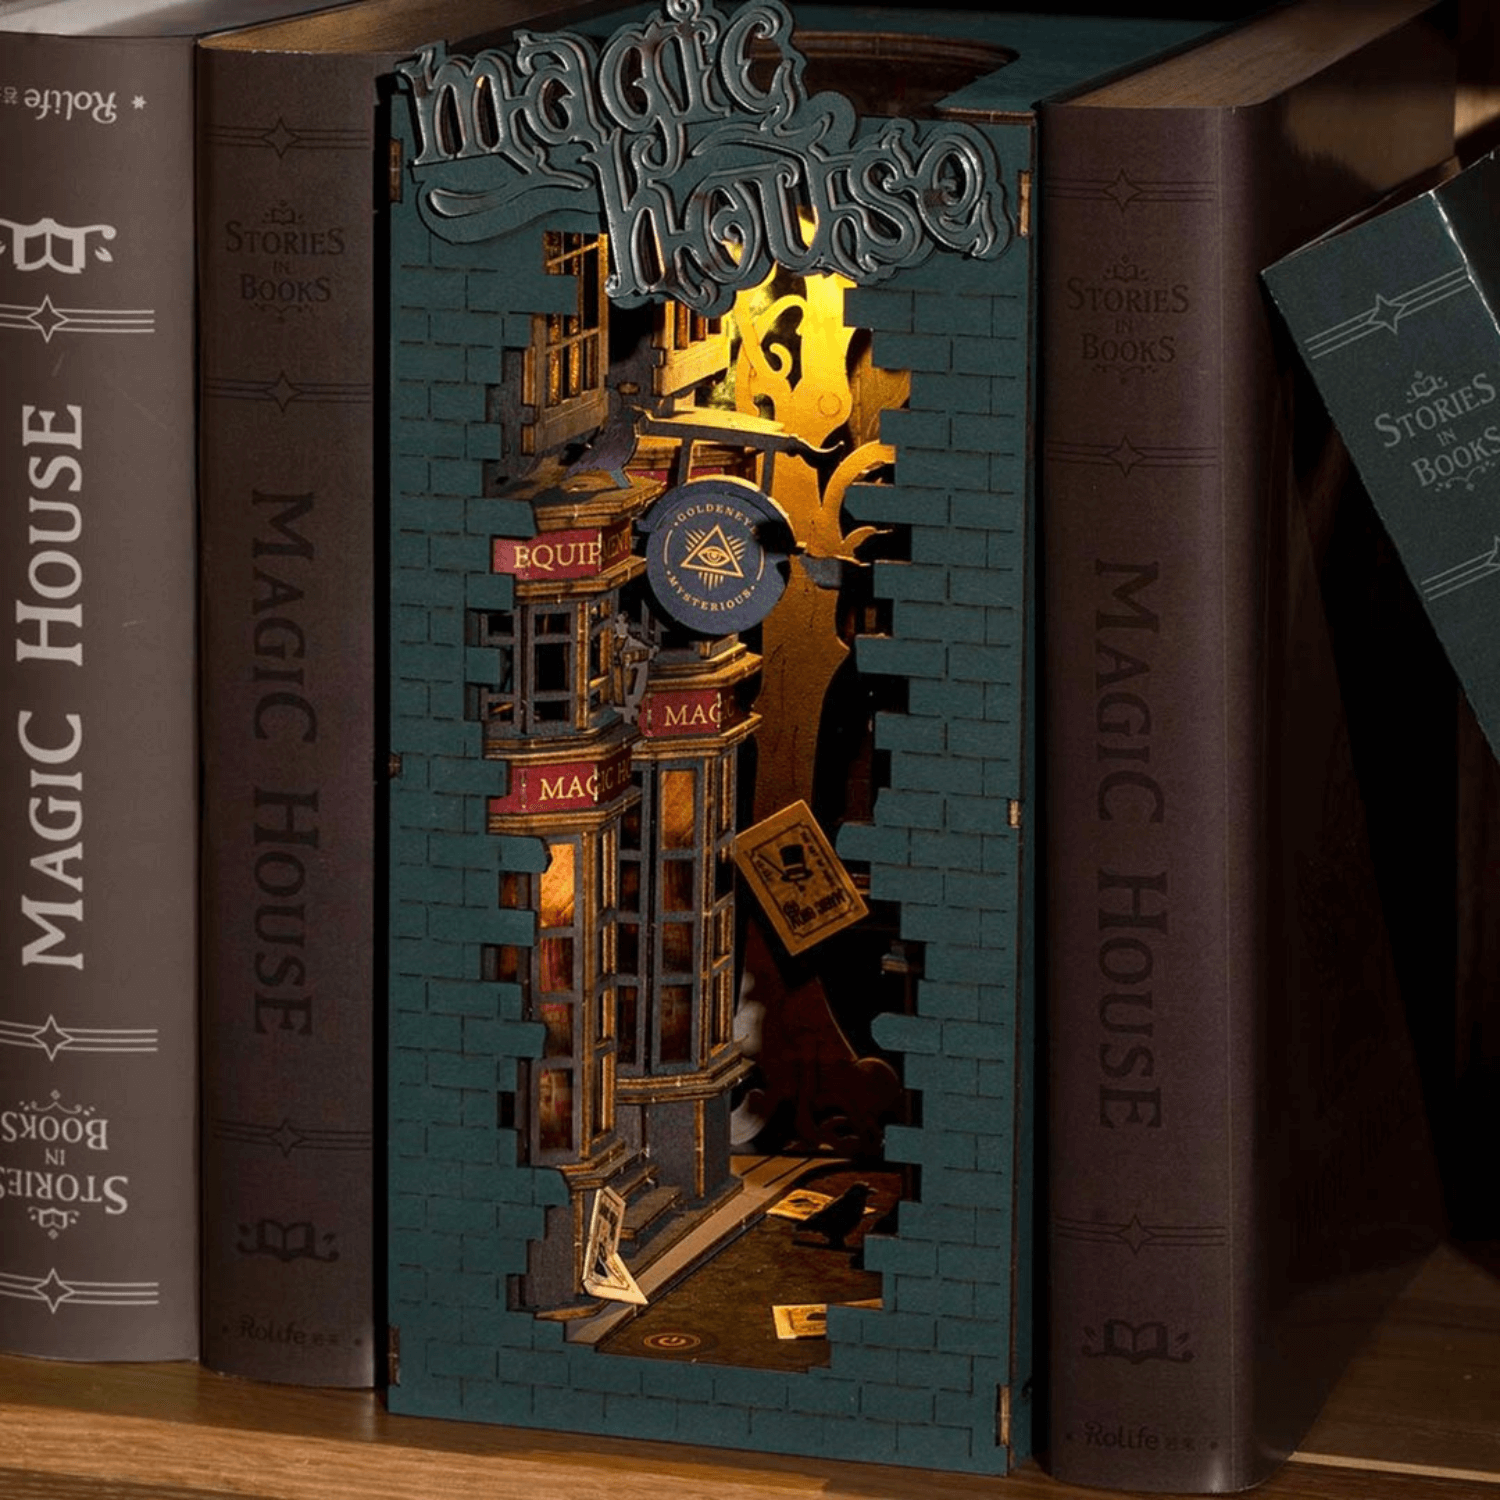 Magic House | Diorama | Rolife Diorama Robotime--